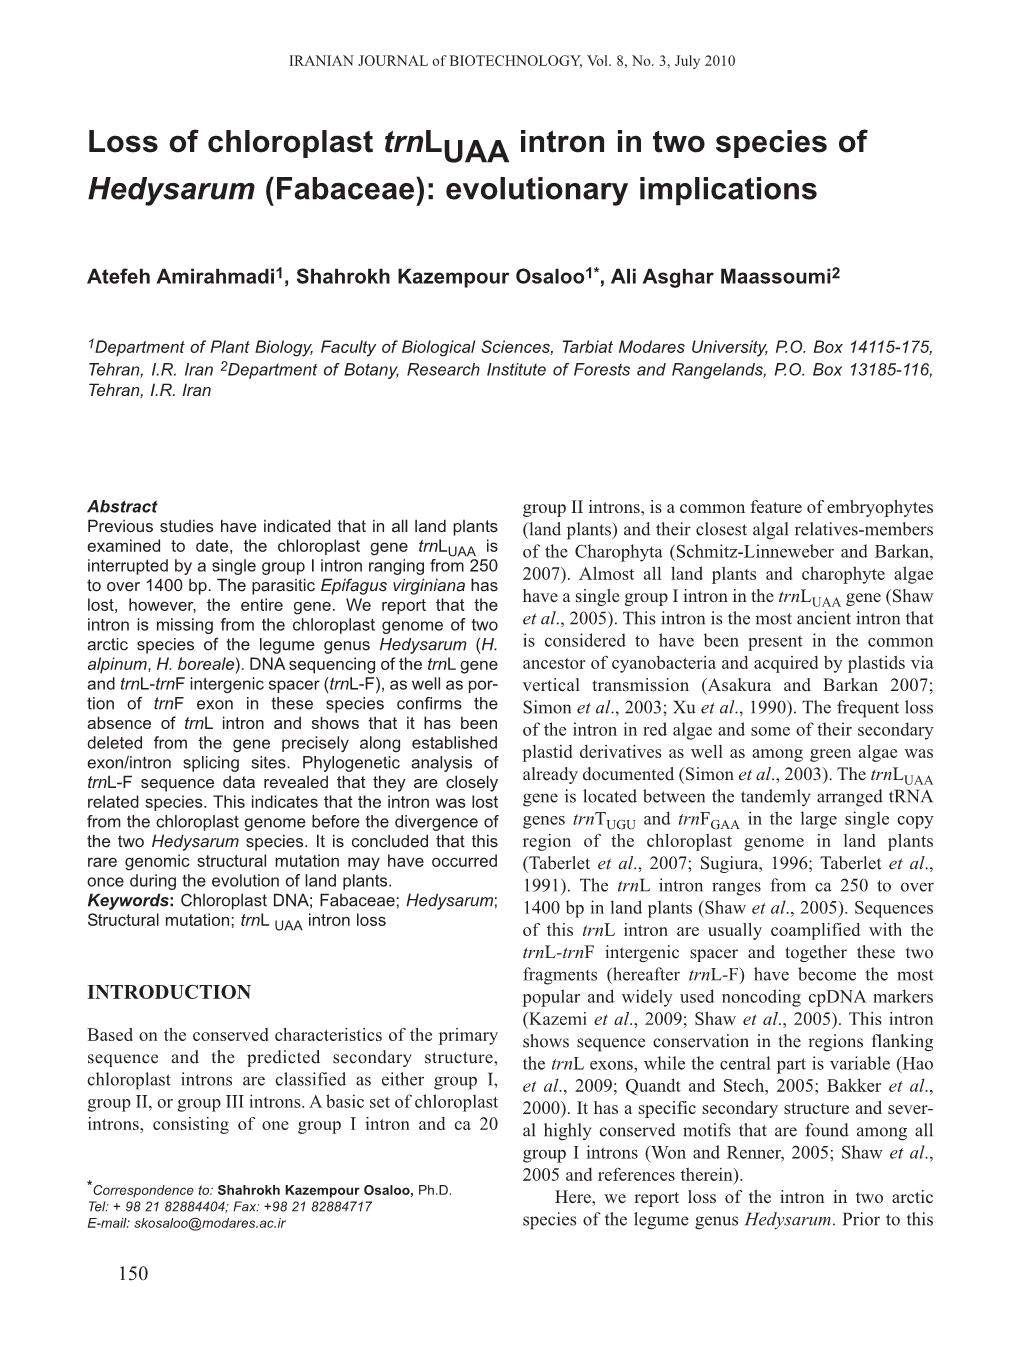 Loss of Chloroplast Trnluaaintron in Two Species of Hedysarum (Fabaceae): Evolutionary Implications